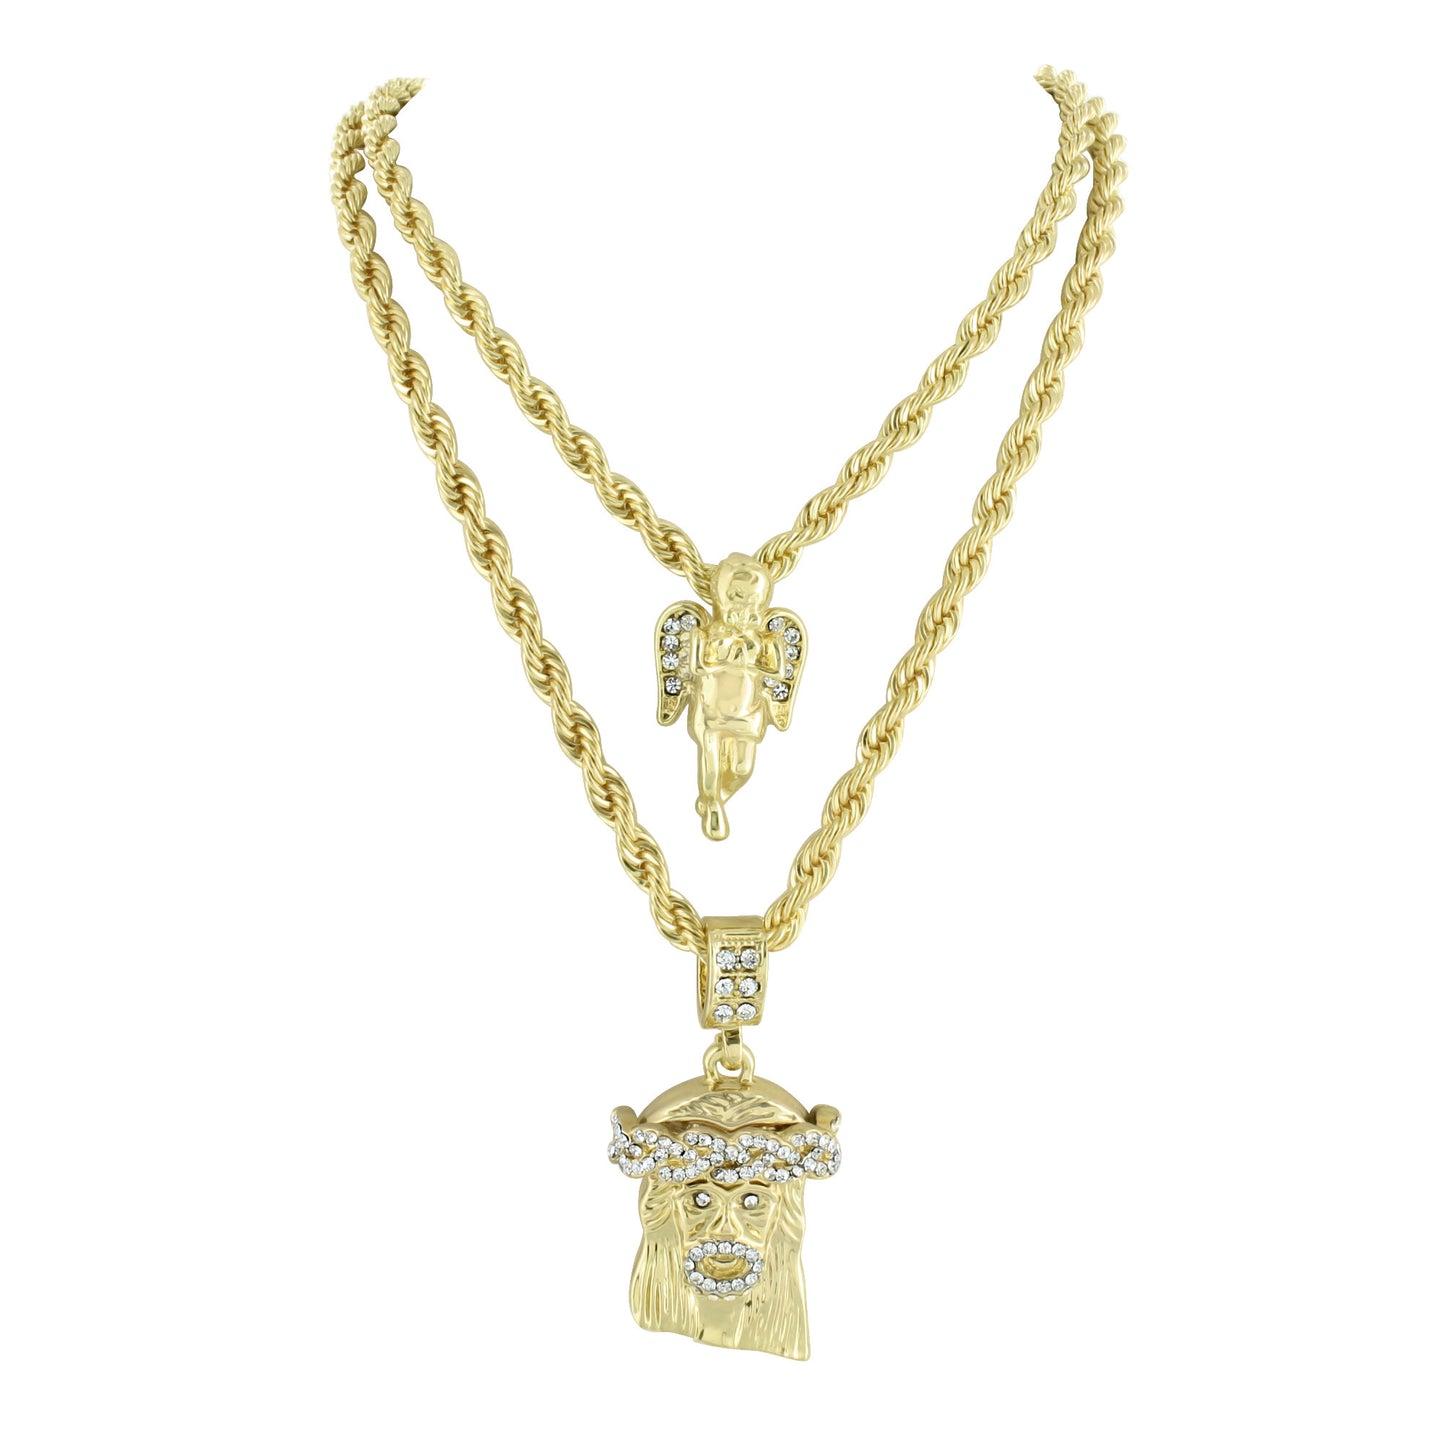 Jesus & Angel Pendant Combo Set With Free Necklaces Chain Gold Tone Lab Diamonds